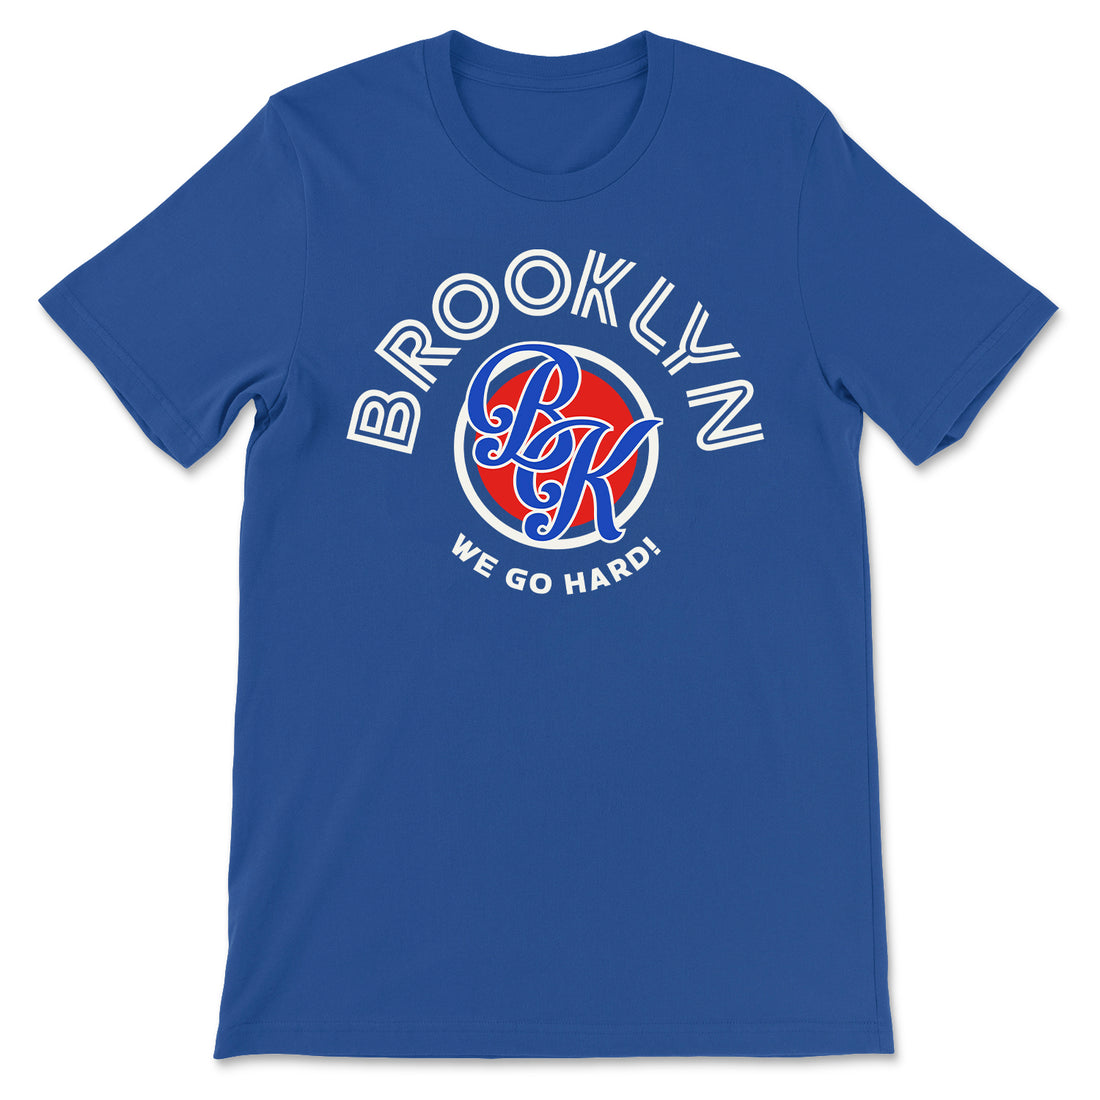 Brooklyn We Go Hard! T-Shirt